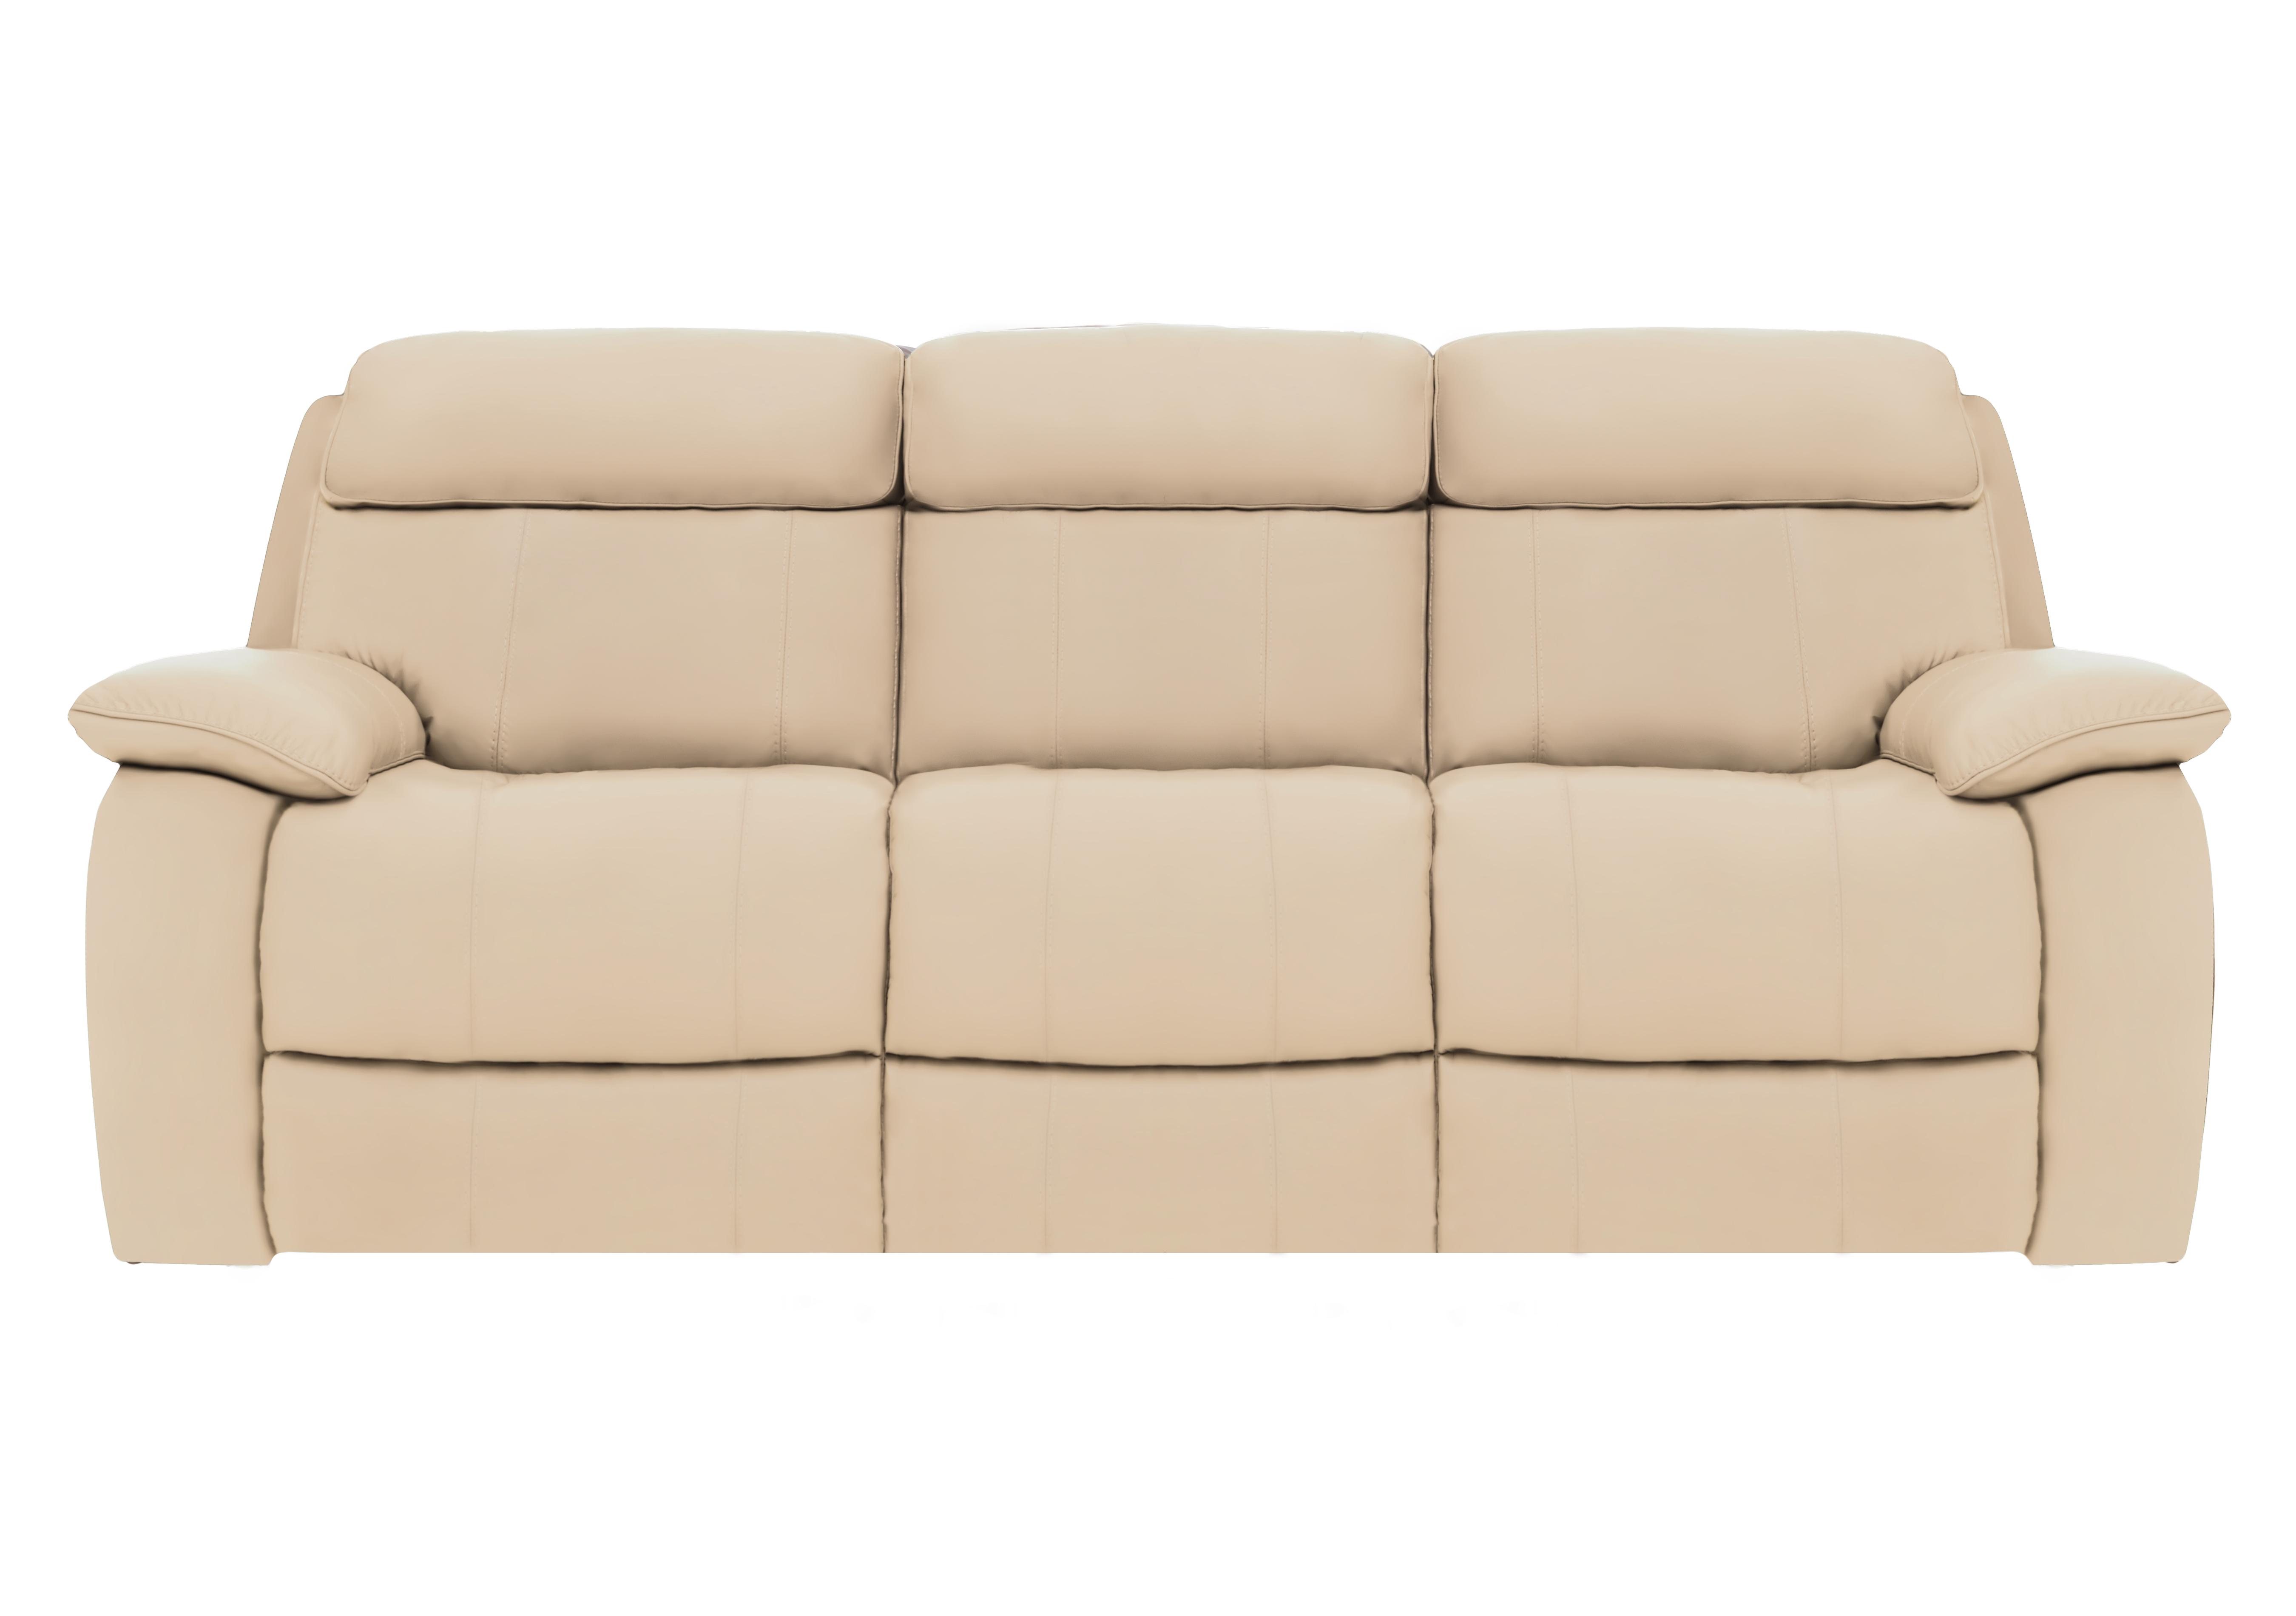 moreno 3 seater leather recliner sofa